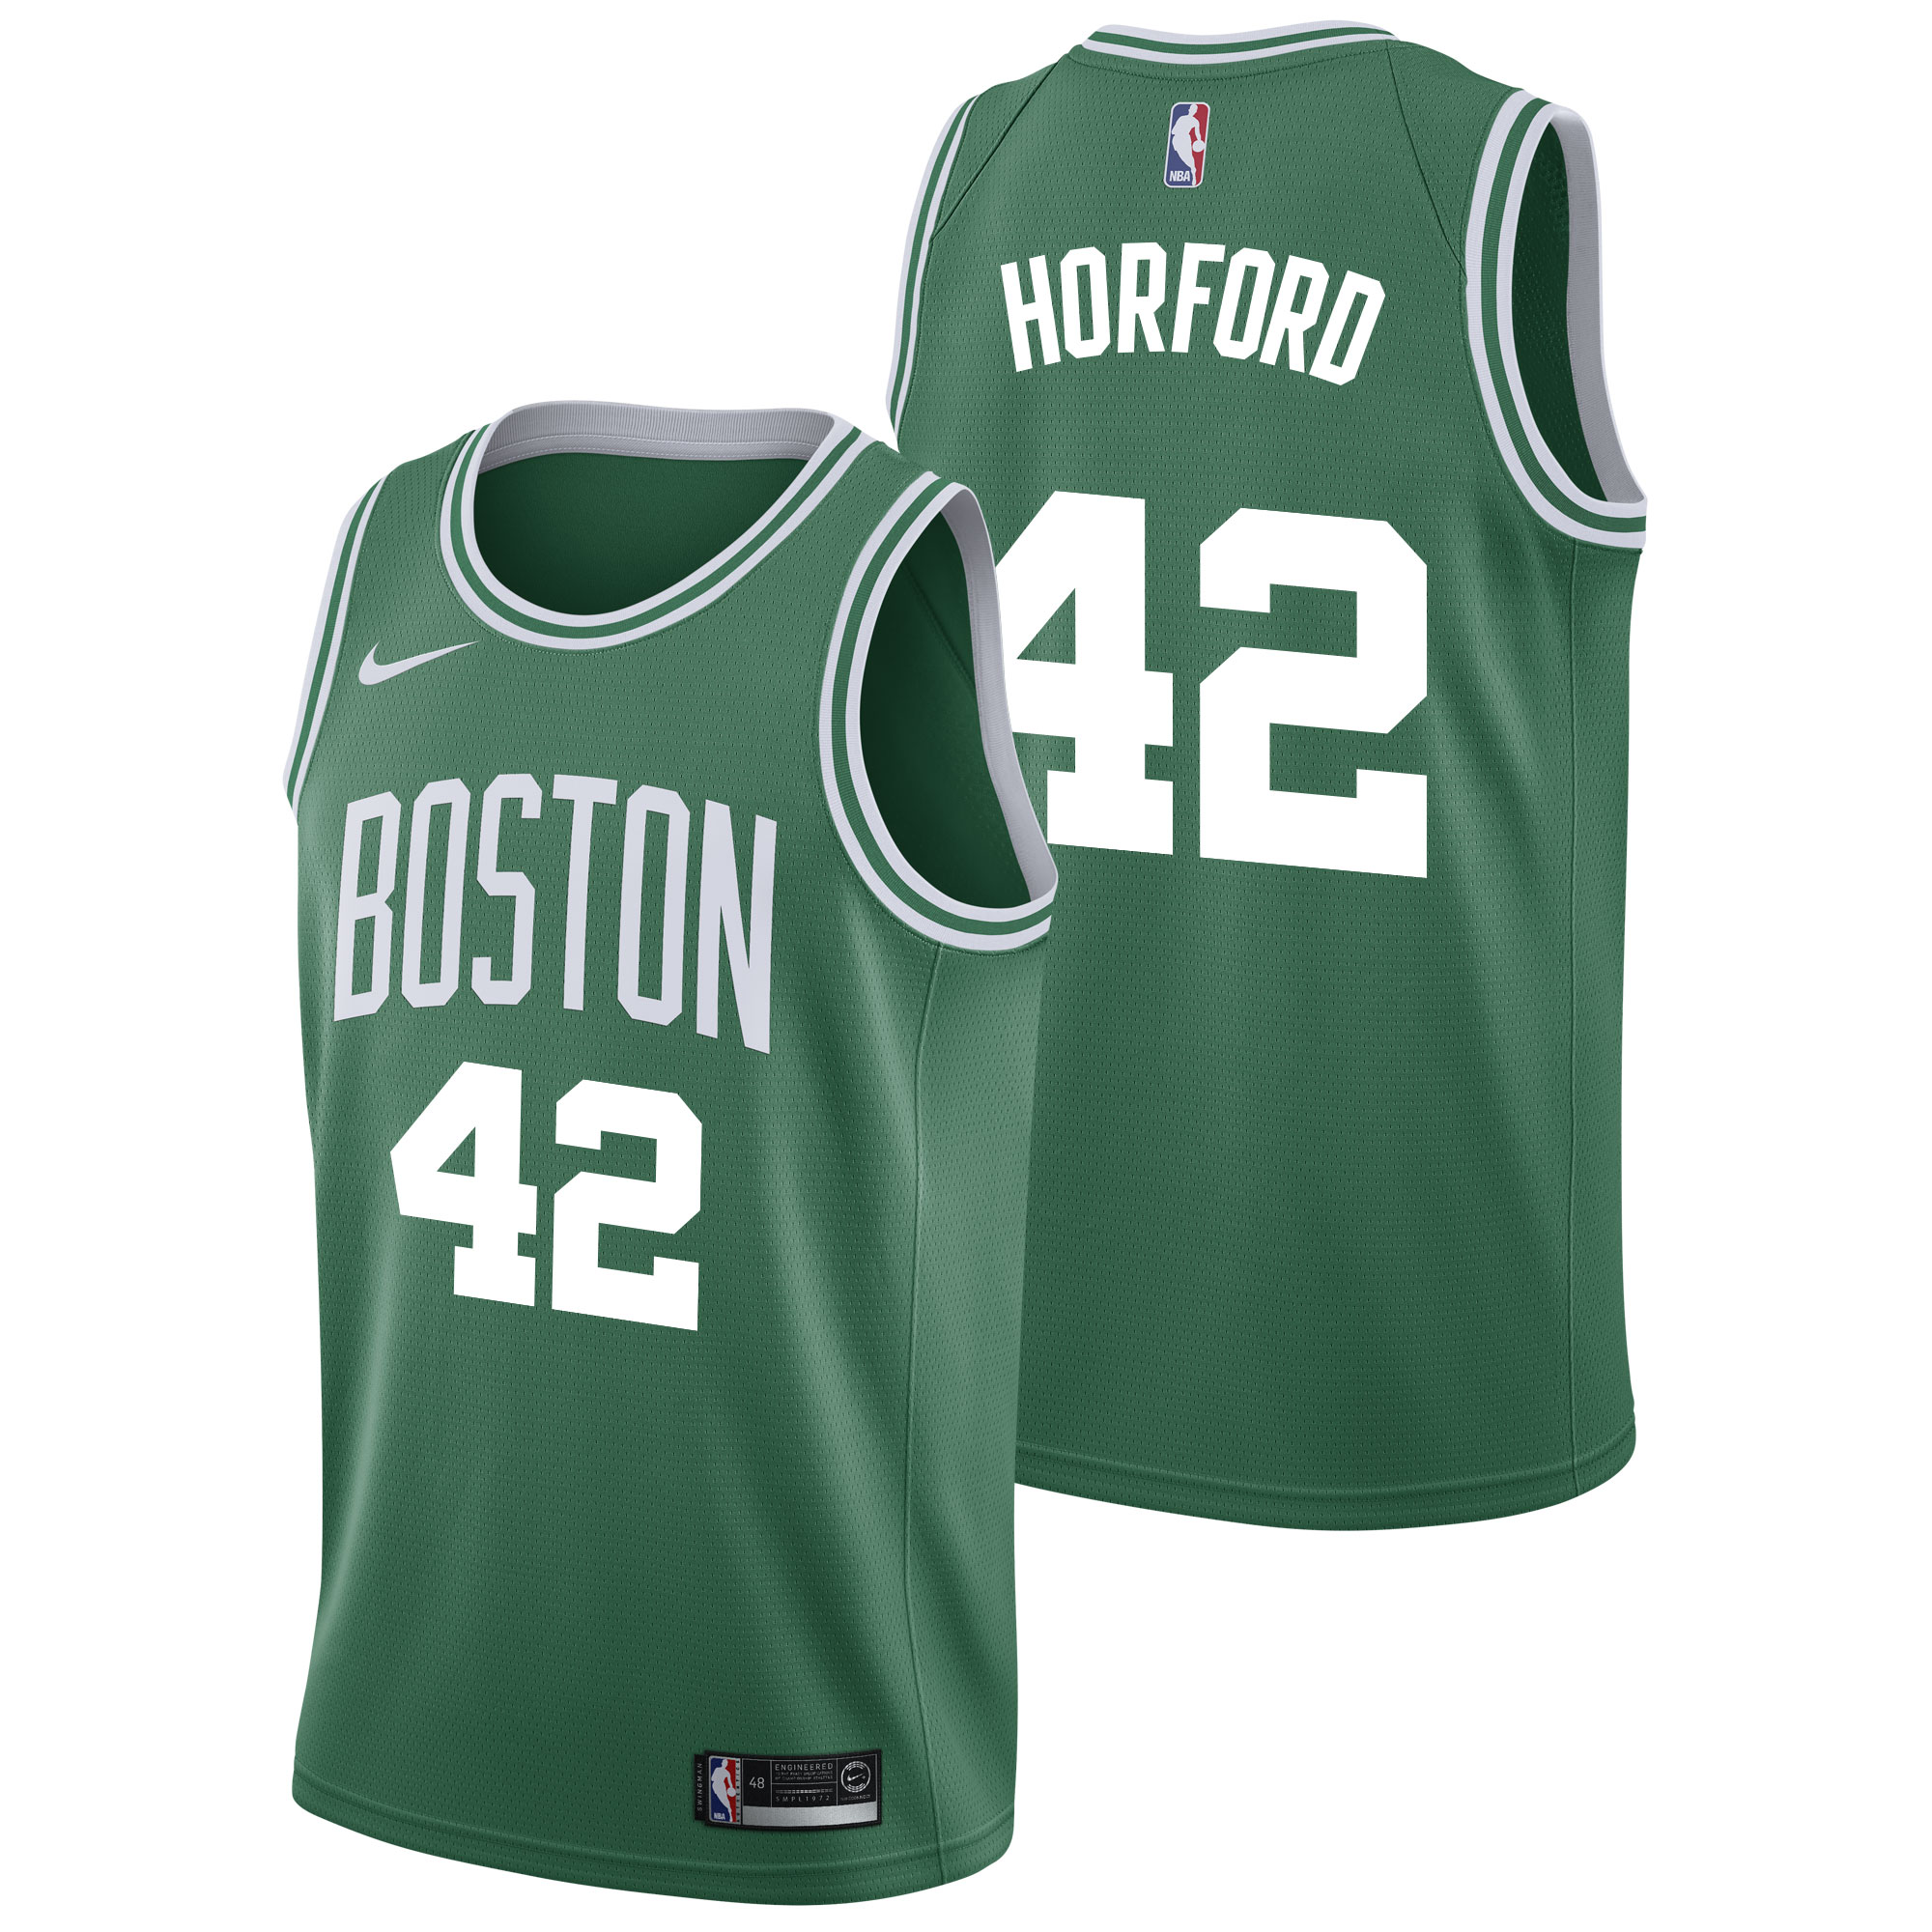 "Boston Celtics Nike Icon Swingman Jersey - Al Horford - Mens"